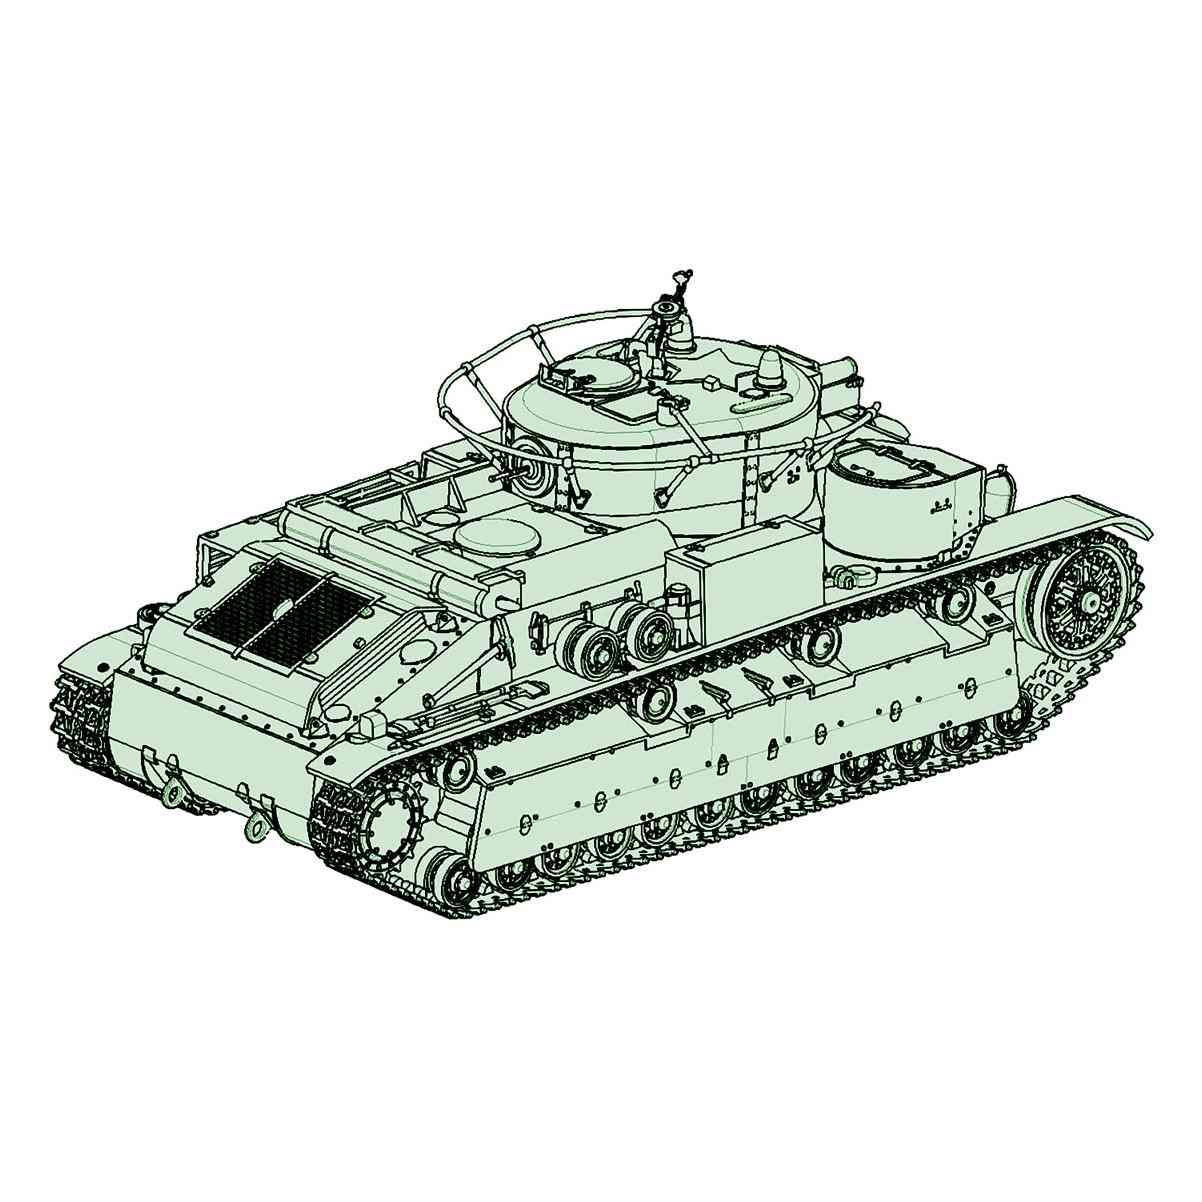 【新製品】07150 ソビエト軍 T-28多砲塔戦車(溶接仕様)